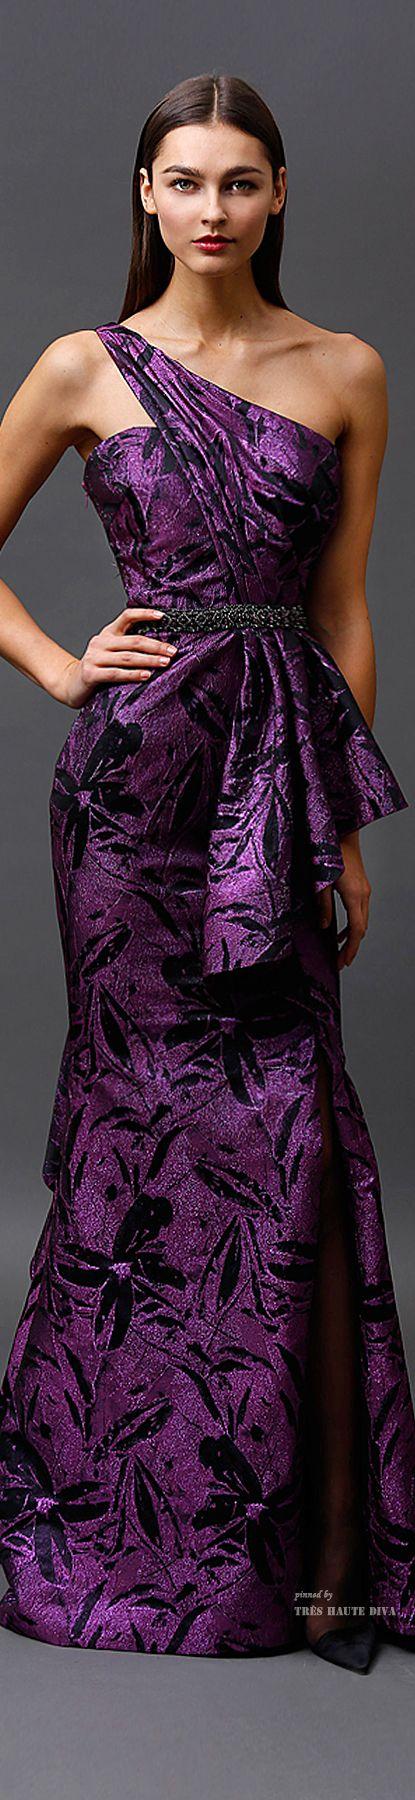 زفاف - Gowns........Purple Passions